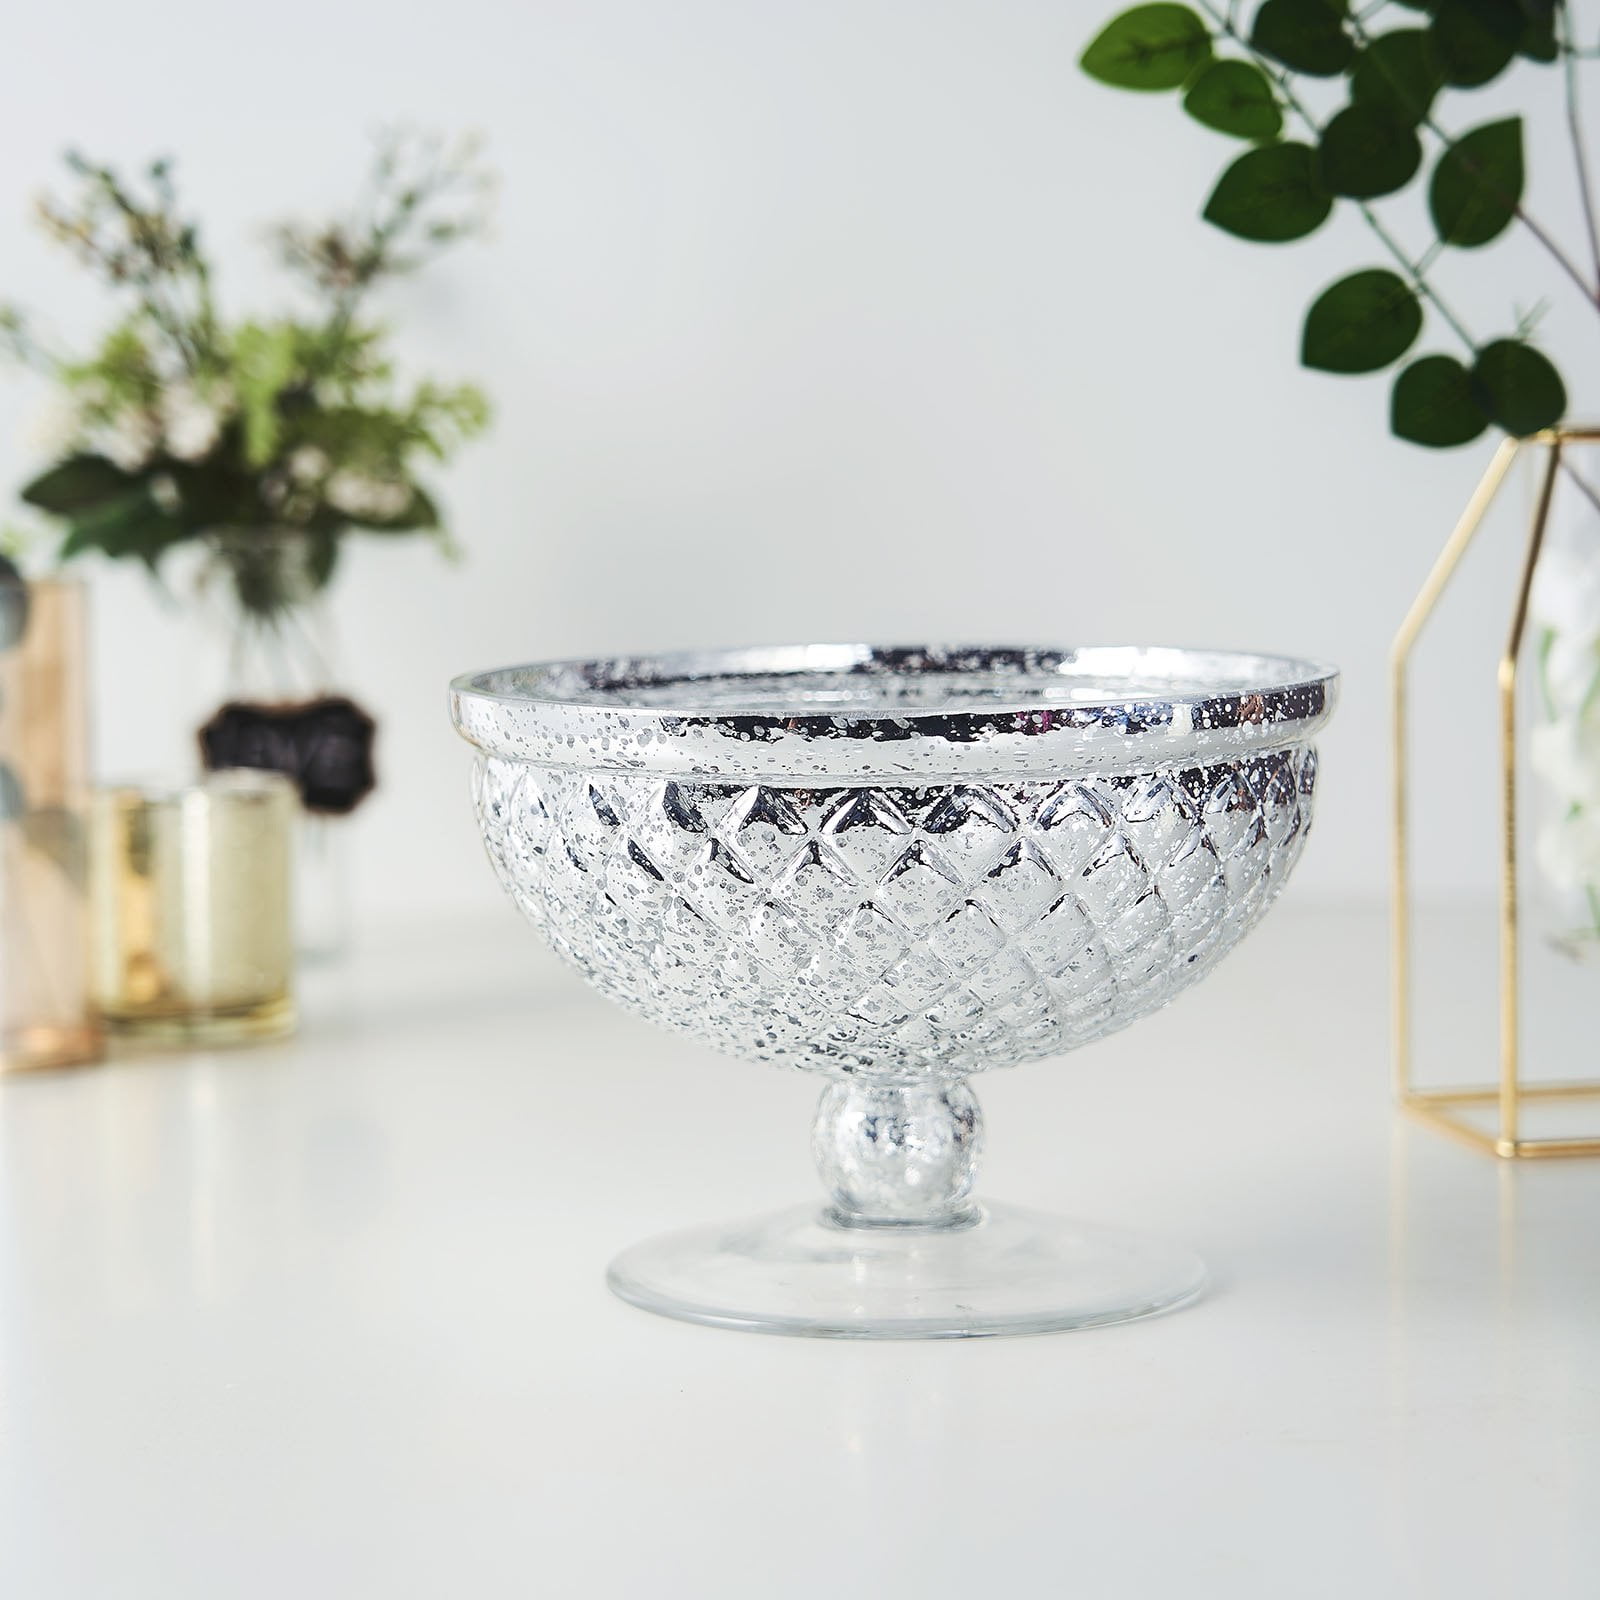 Efavormart 8 Mercury Glass Compote Vase Pedestal Bowl For Wedding Floral Centerpiece Home